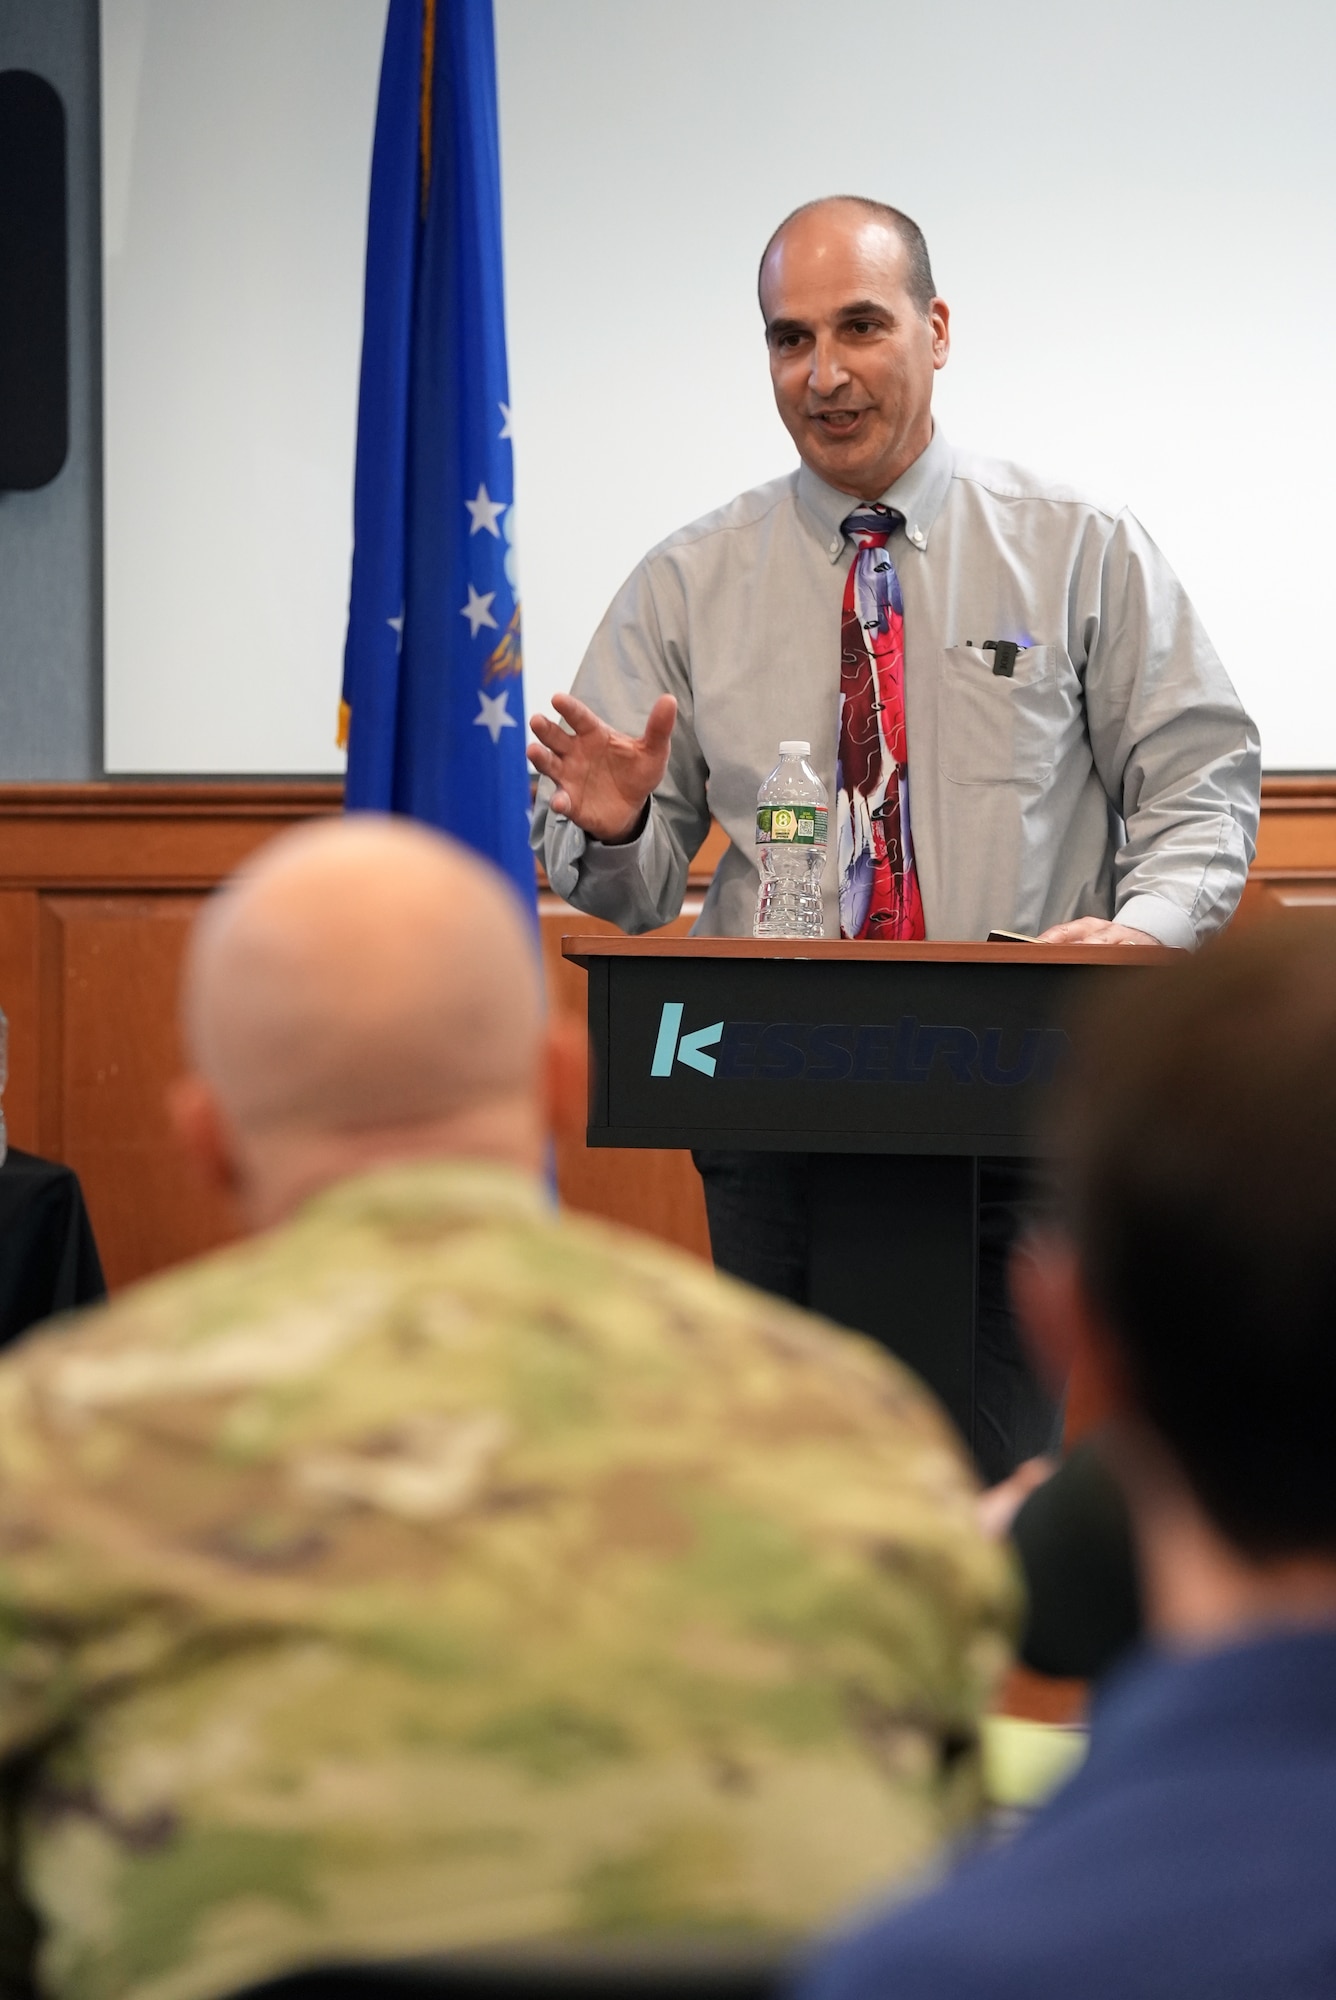 John Vona, Air Combat Command’s Deputy Director of Plans, Program and Requirements Directorate